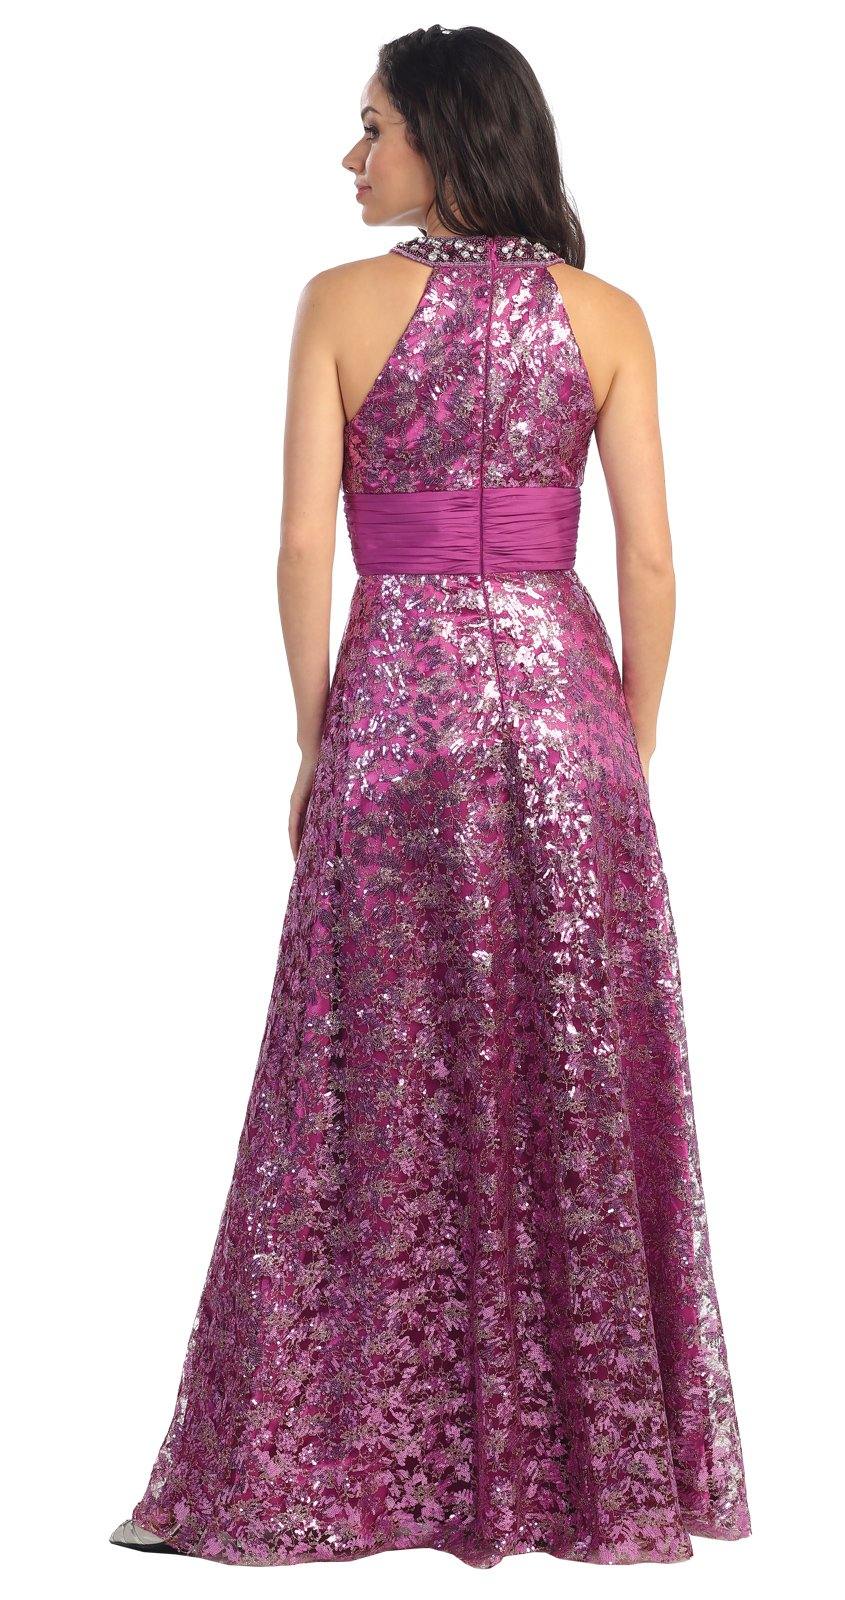 Long Lace Prom Dress Evening Gown - The Dress Outlet Elizabeth K